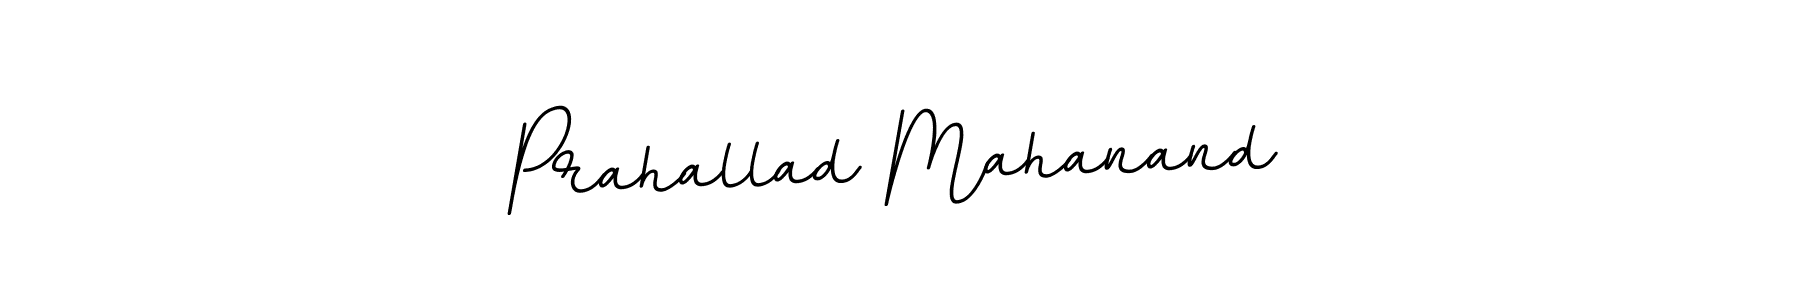 How to Draw Prahallad Mahanand signature style? BallpointsItalic-DORy9 is a latest design signature styles for name Prahallad Mahanand. Prahallad Mahanand signature style 11 images and pictures png